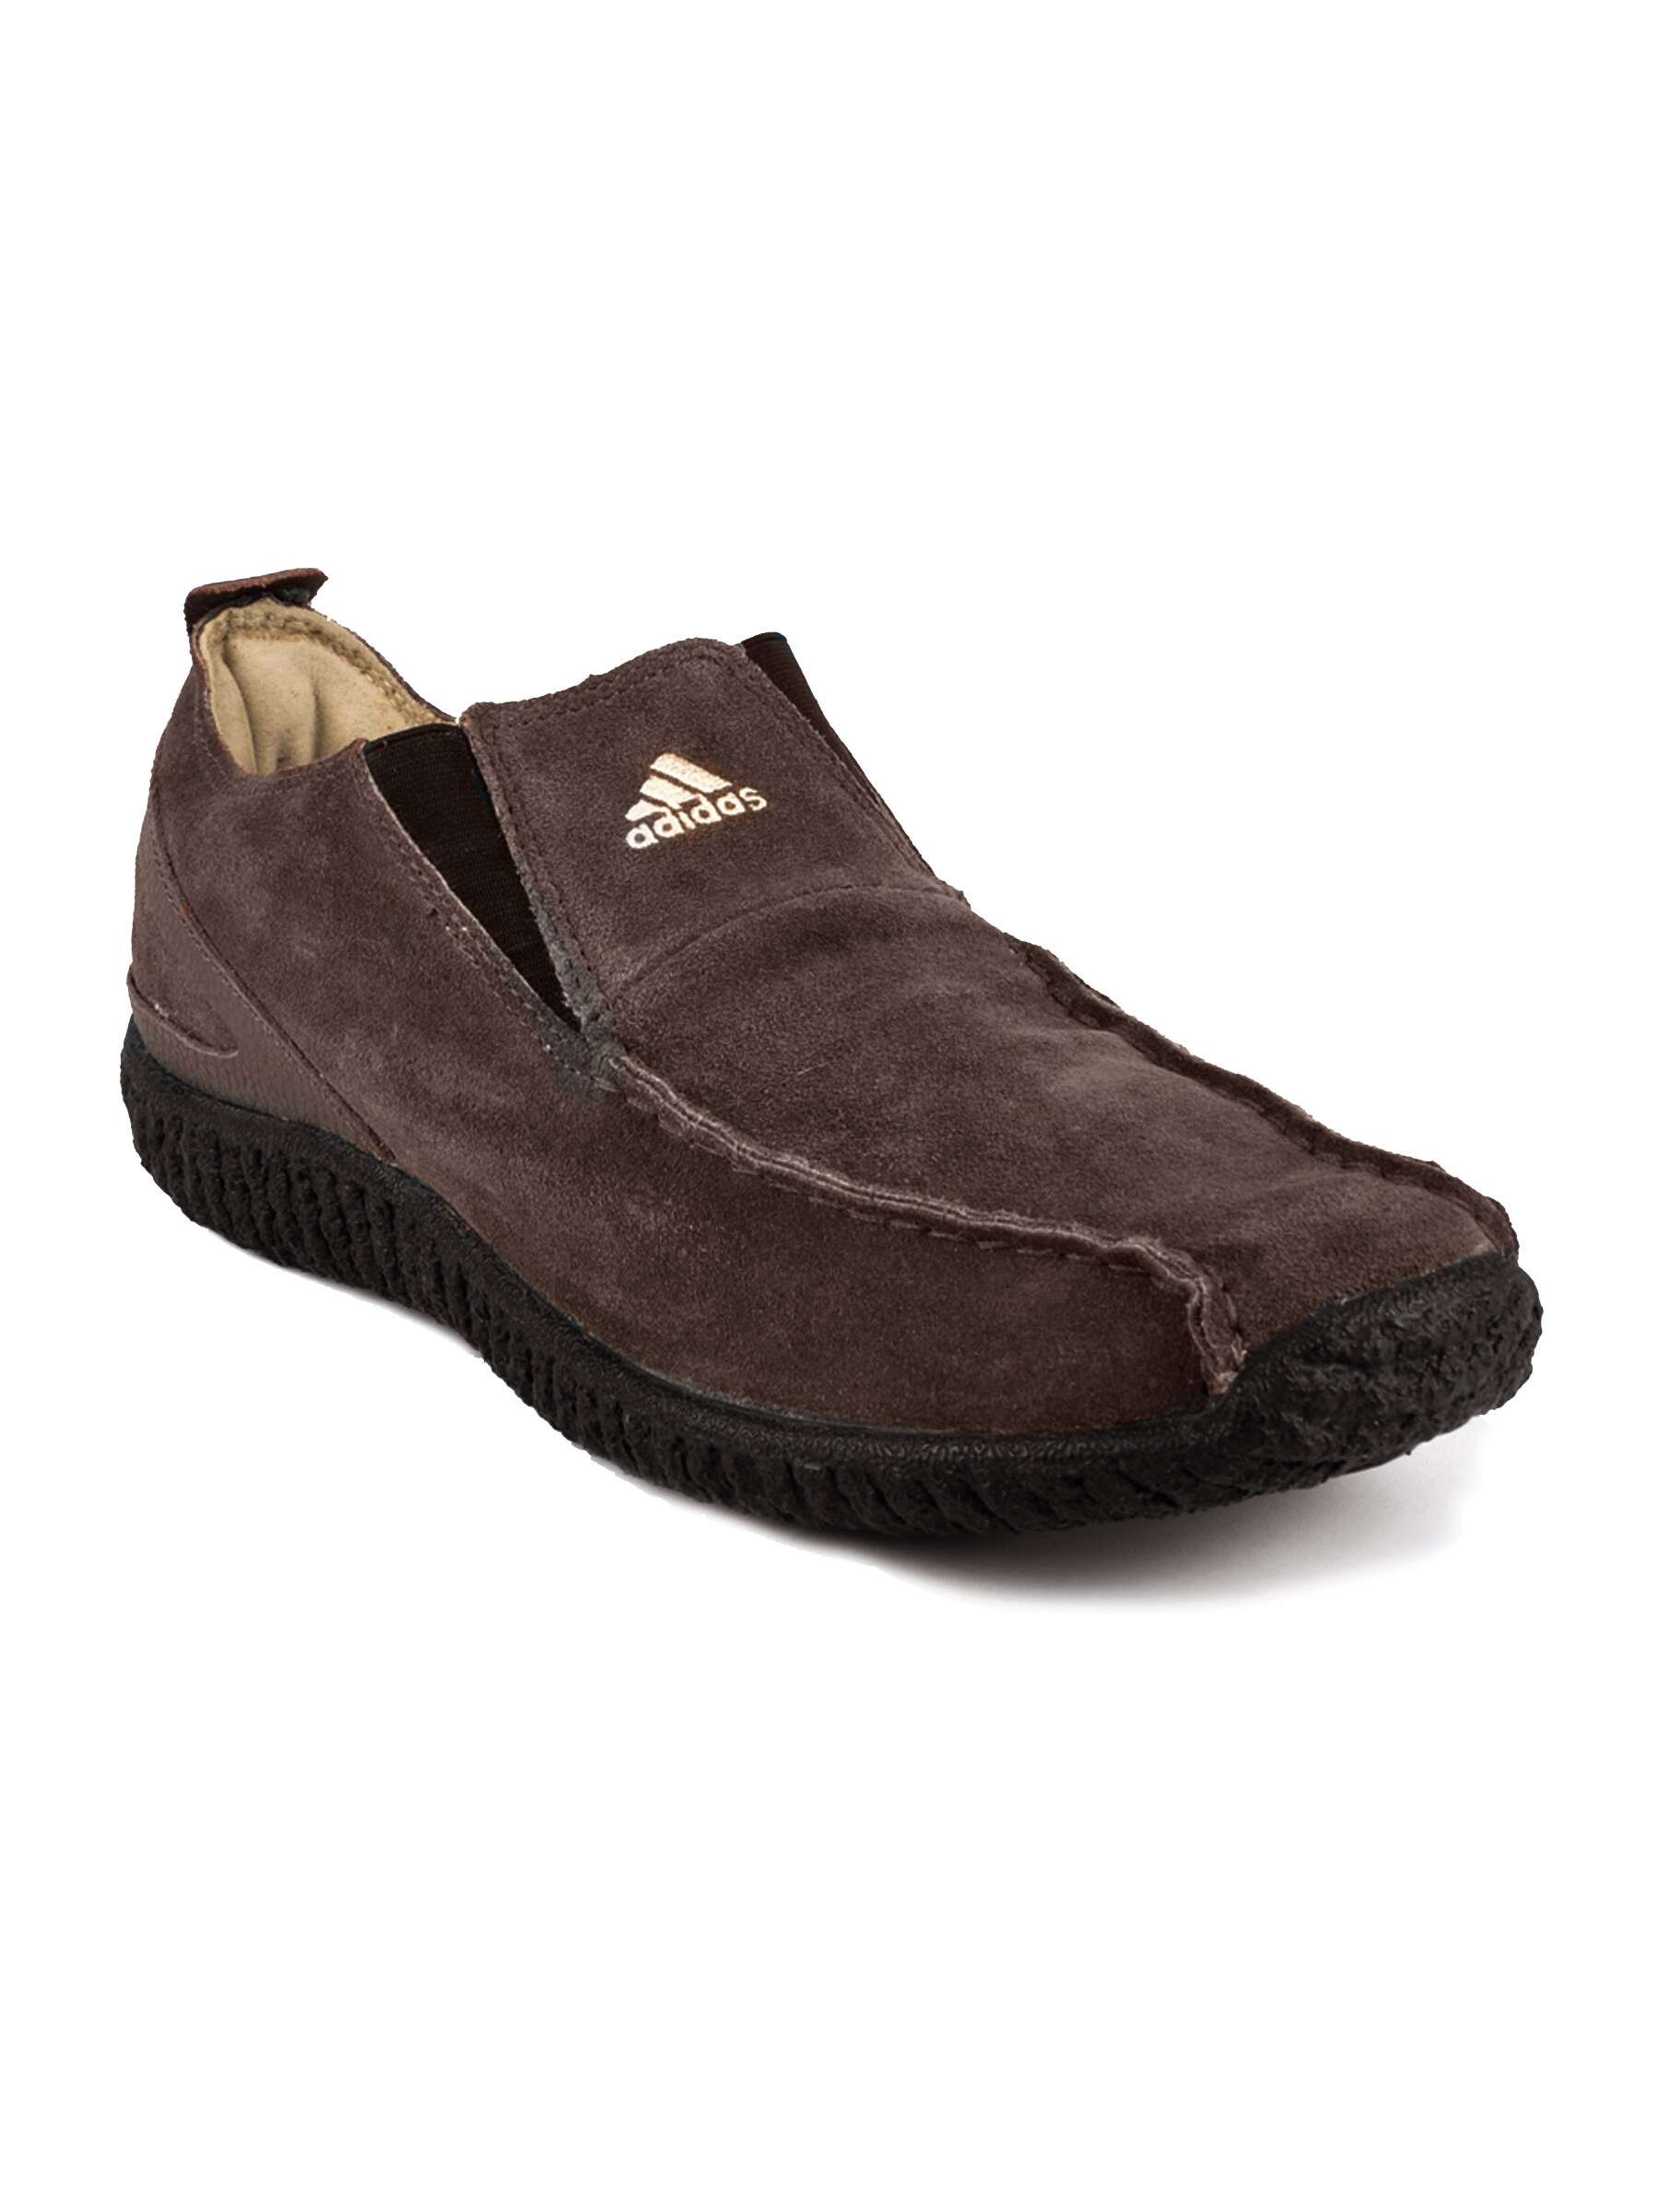 ADIDAS Men Anzo Breeze Brown Casual Shoes